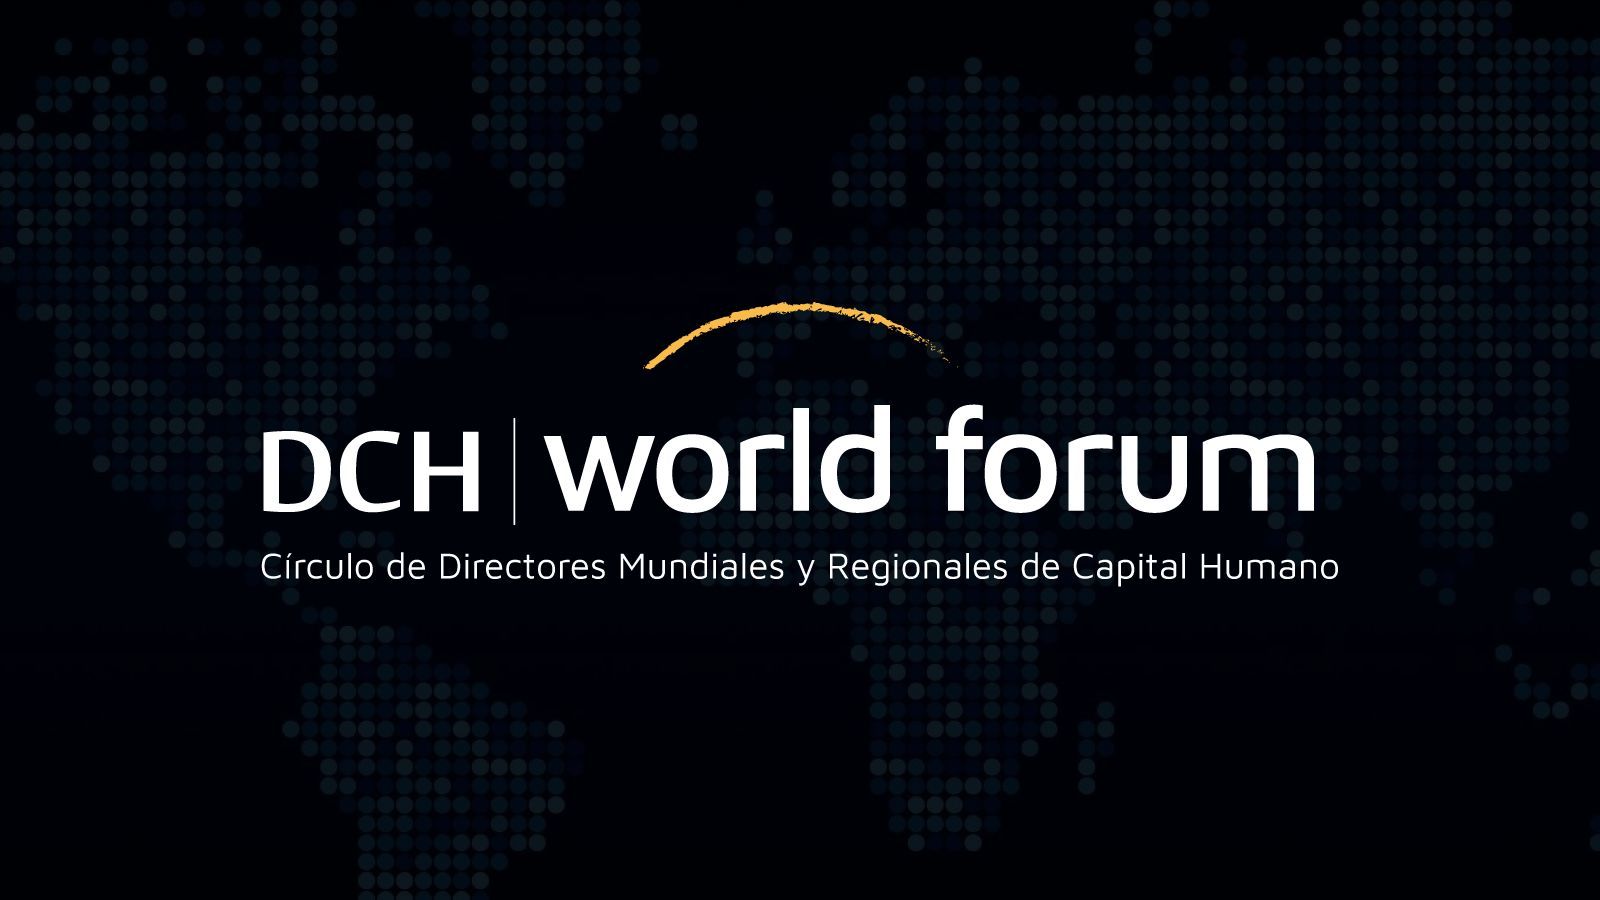 edch world forum 1